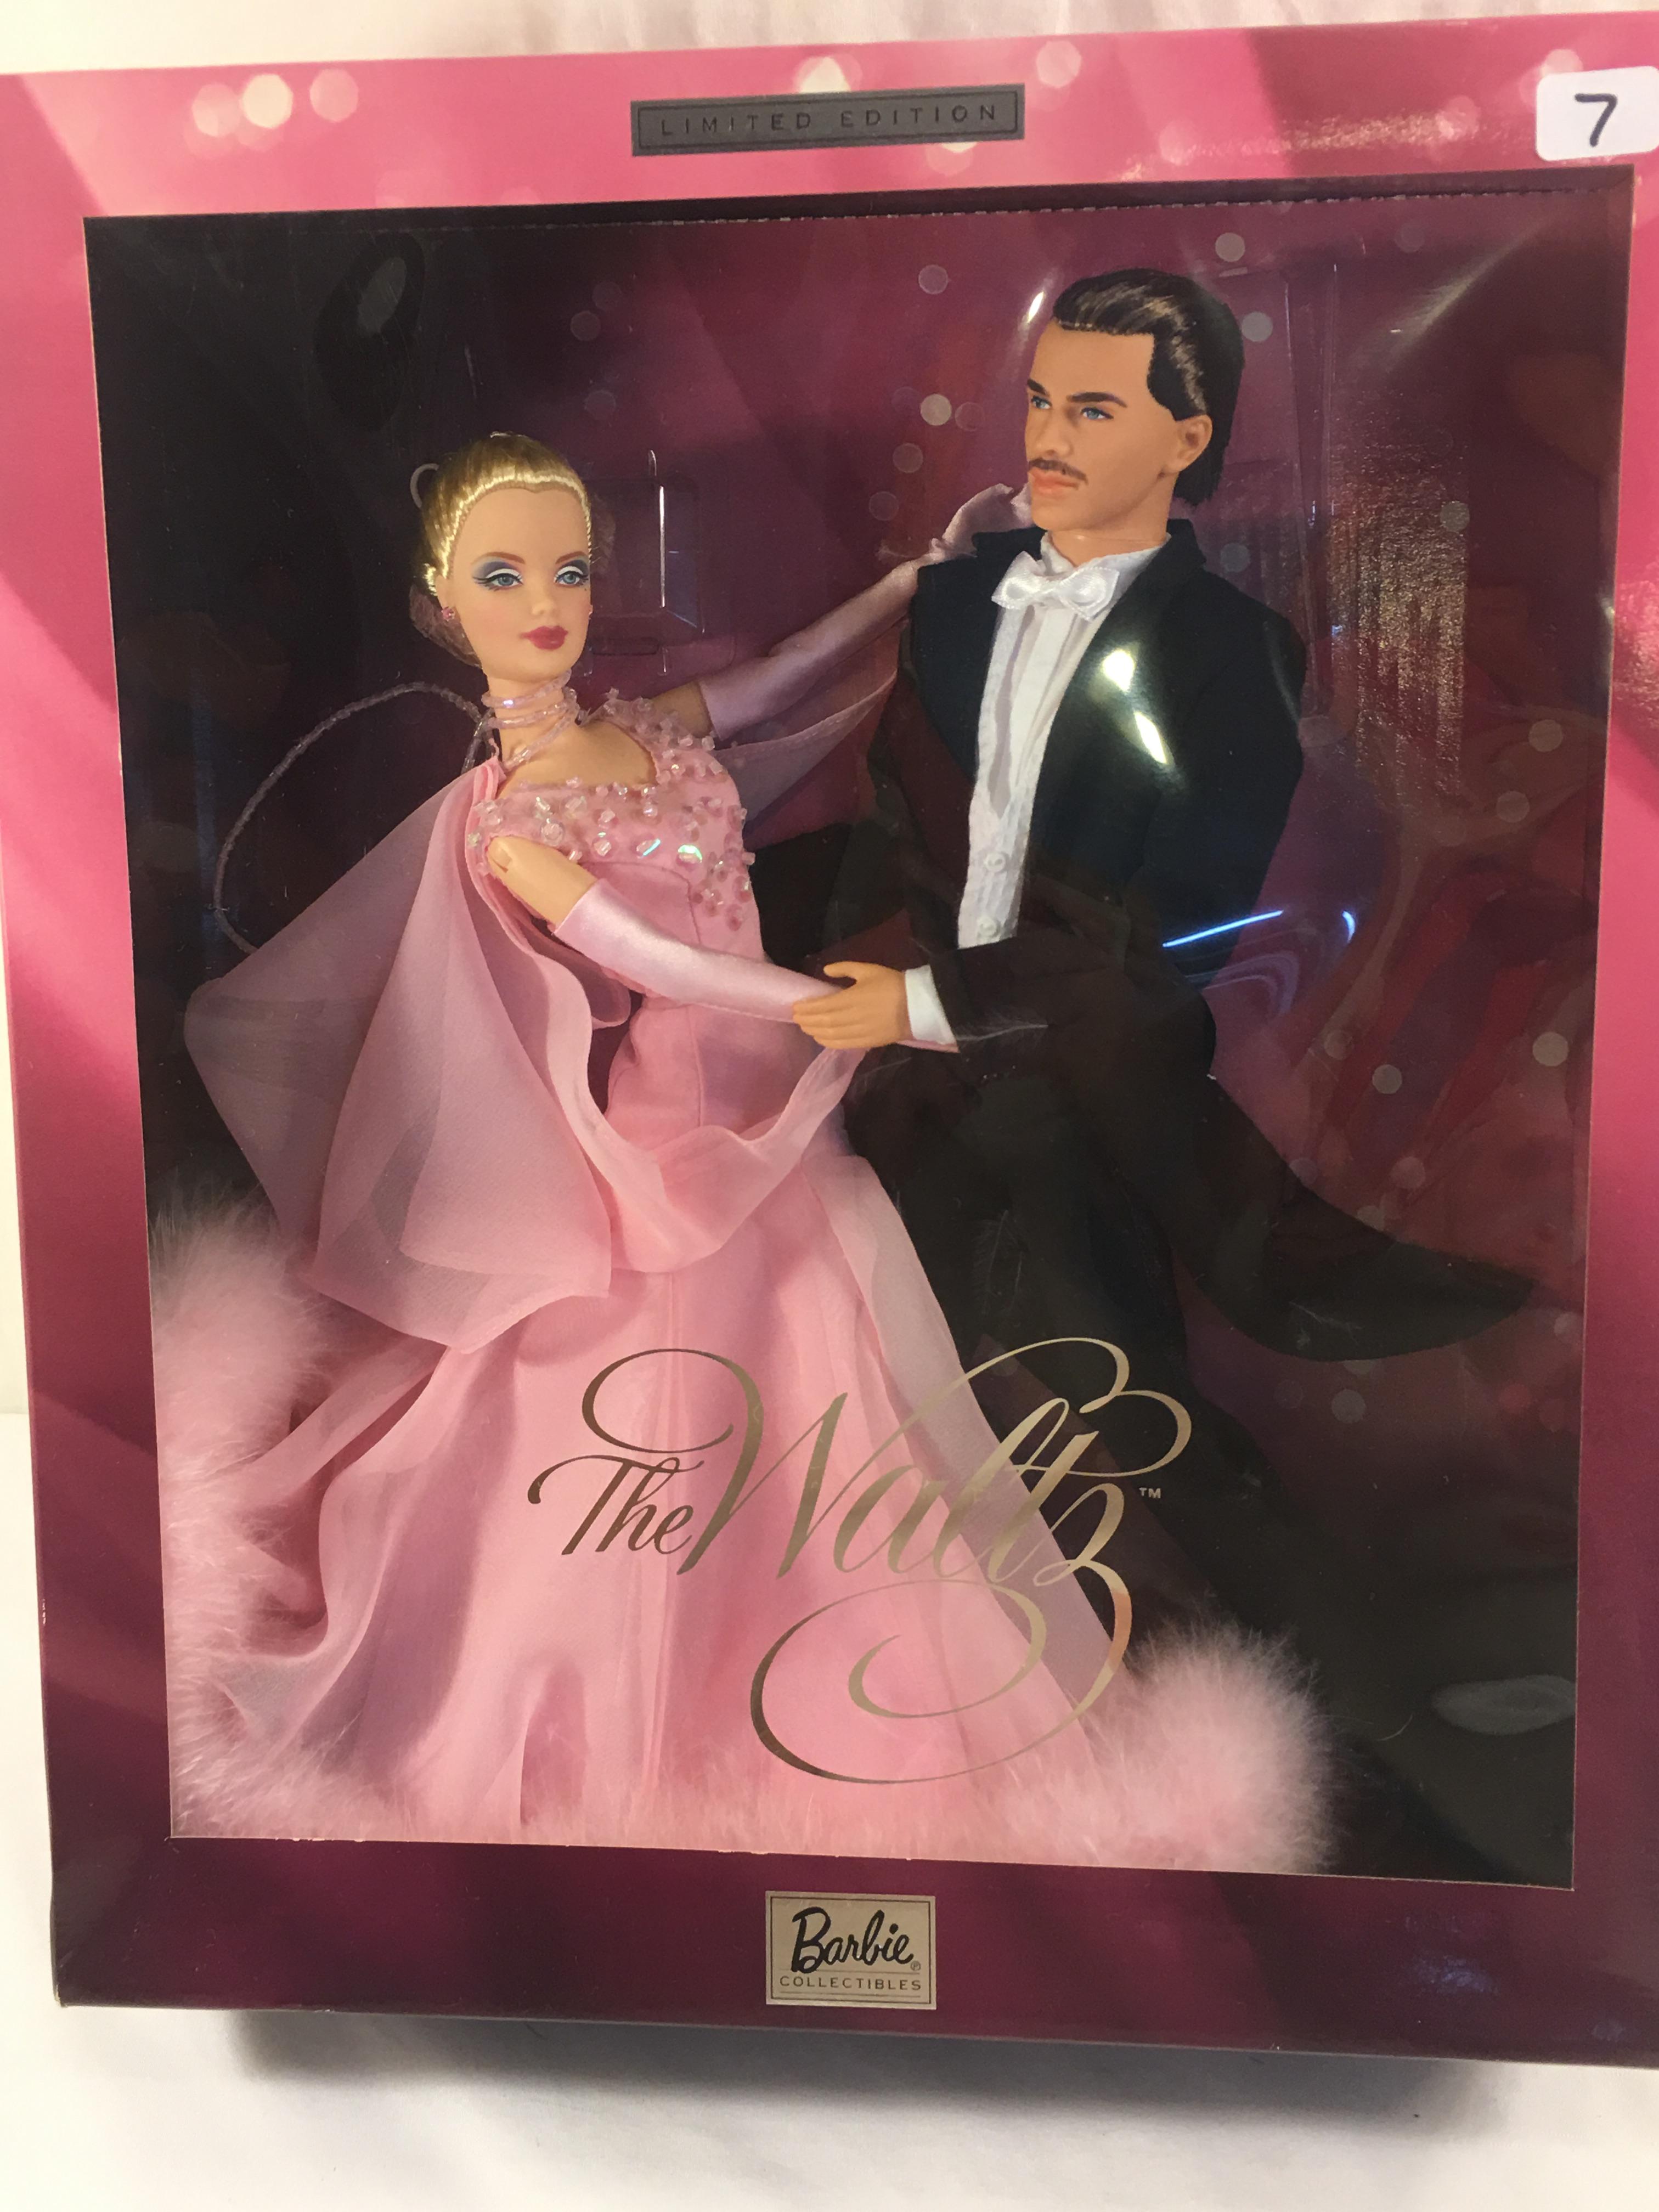 NIB Collector Barbie Limited Edition The Waltz Barbie Doll Box Size: 13.5"Tall Box